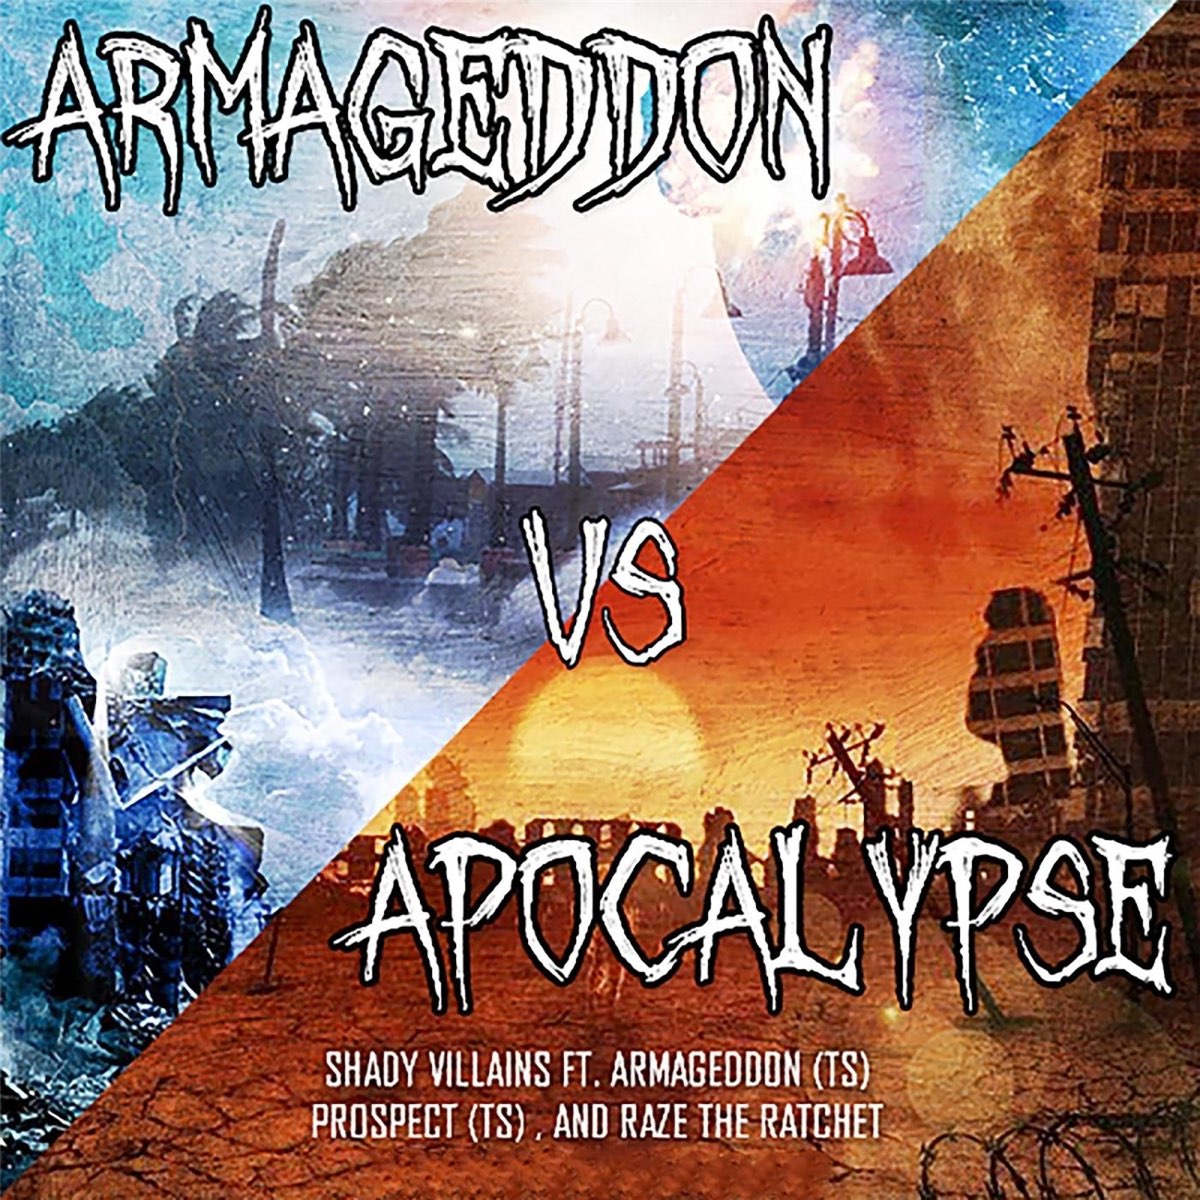 Музыка апокалипсиса слушать. Армагеддон апокалипсис. The album Armageddon. Армагеддон песня.